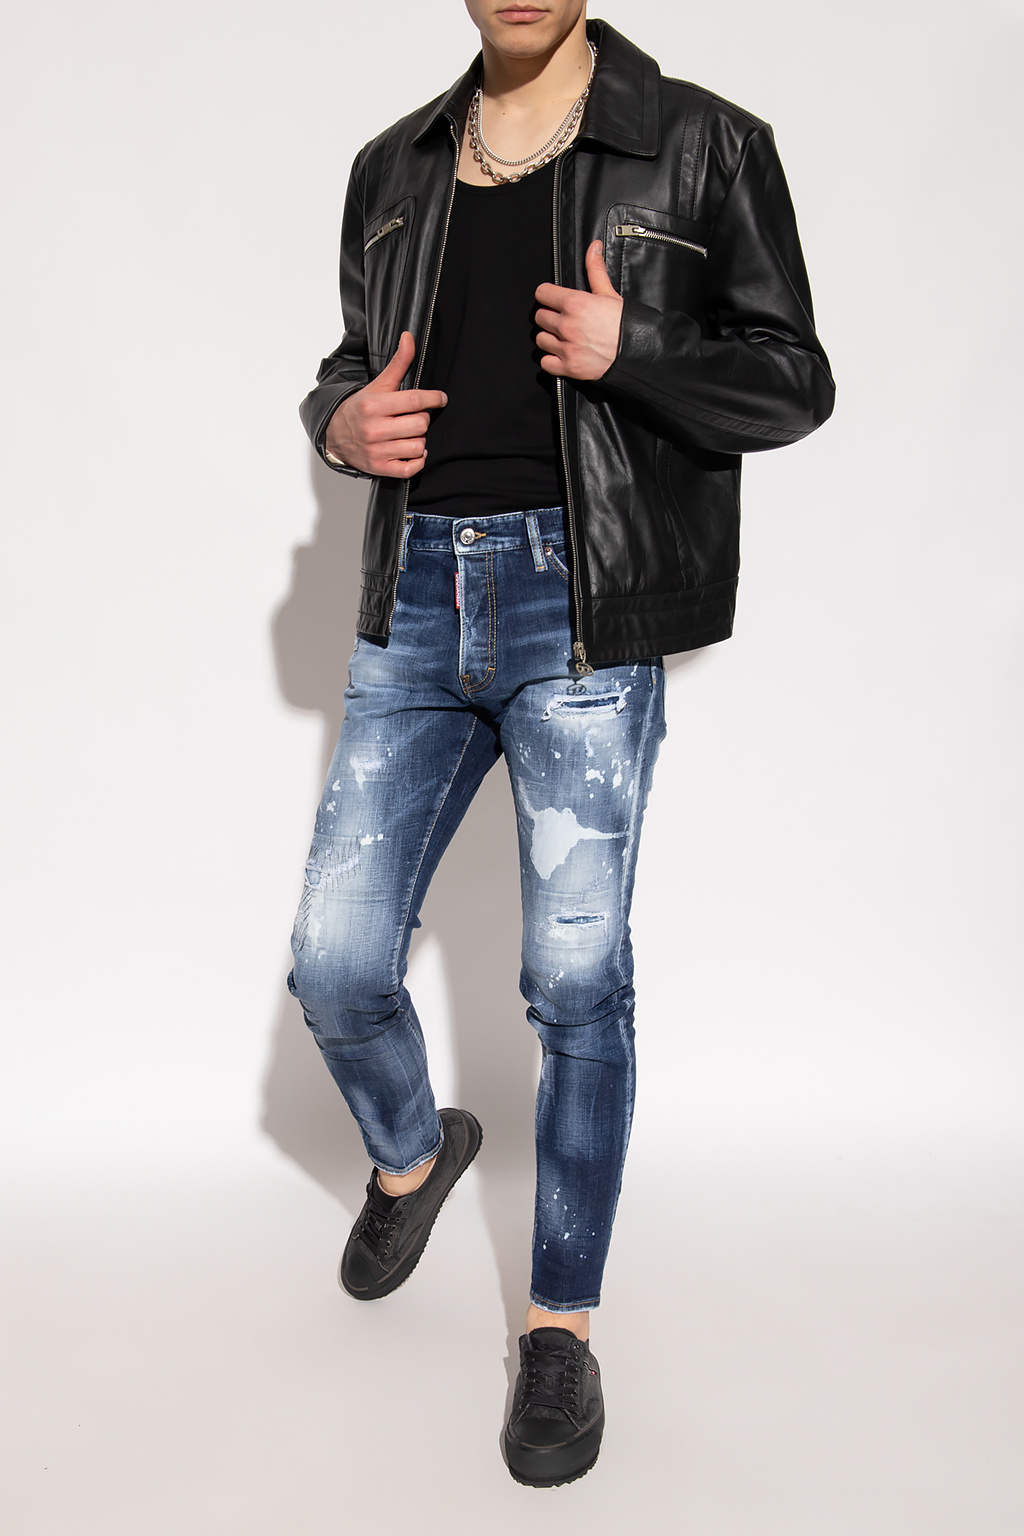 Dsquared2 ‘Cool Guy’ jeans | Men's Clothing | Vitkac